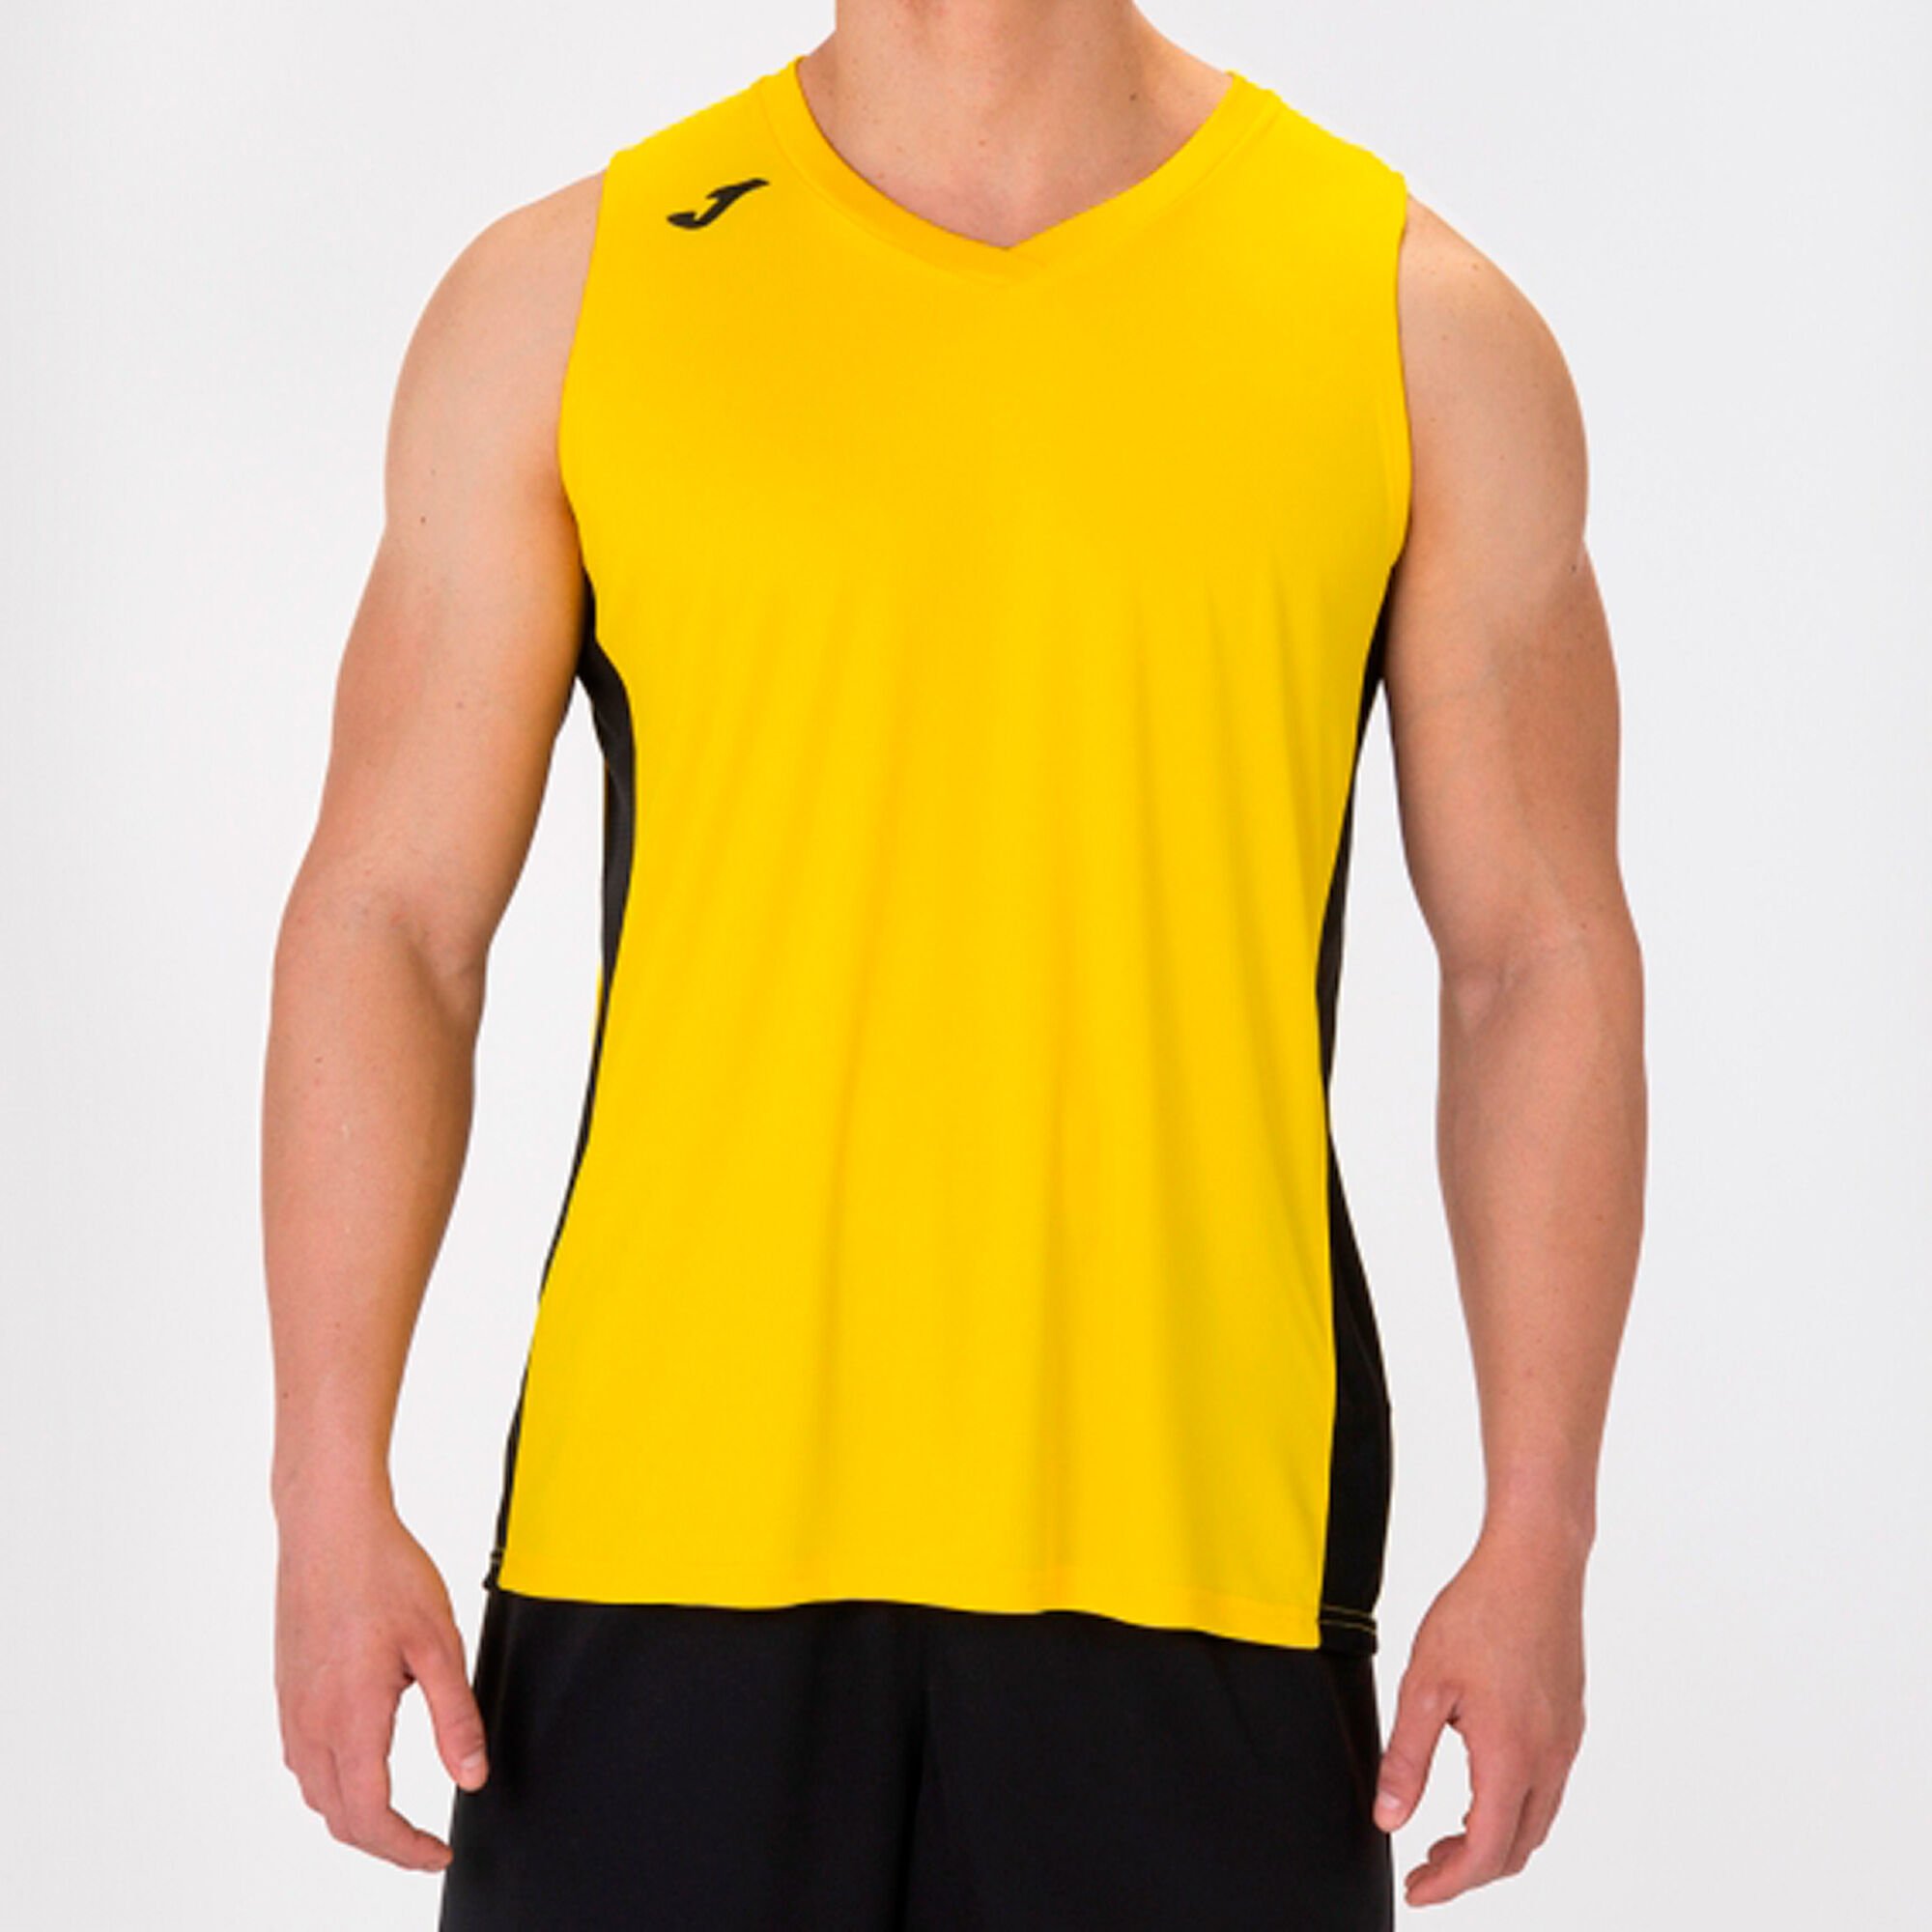 T-shirt de alça homem Cancha III amarelo preto